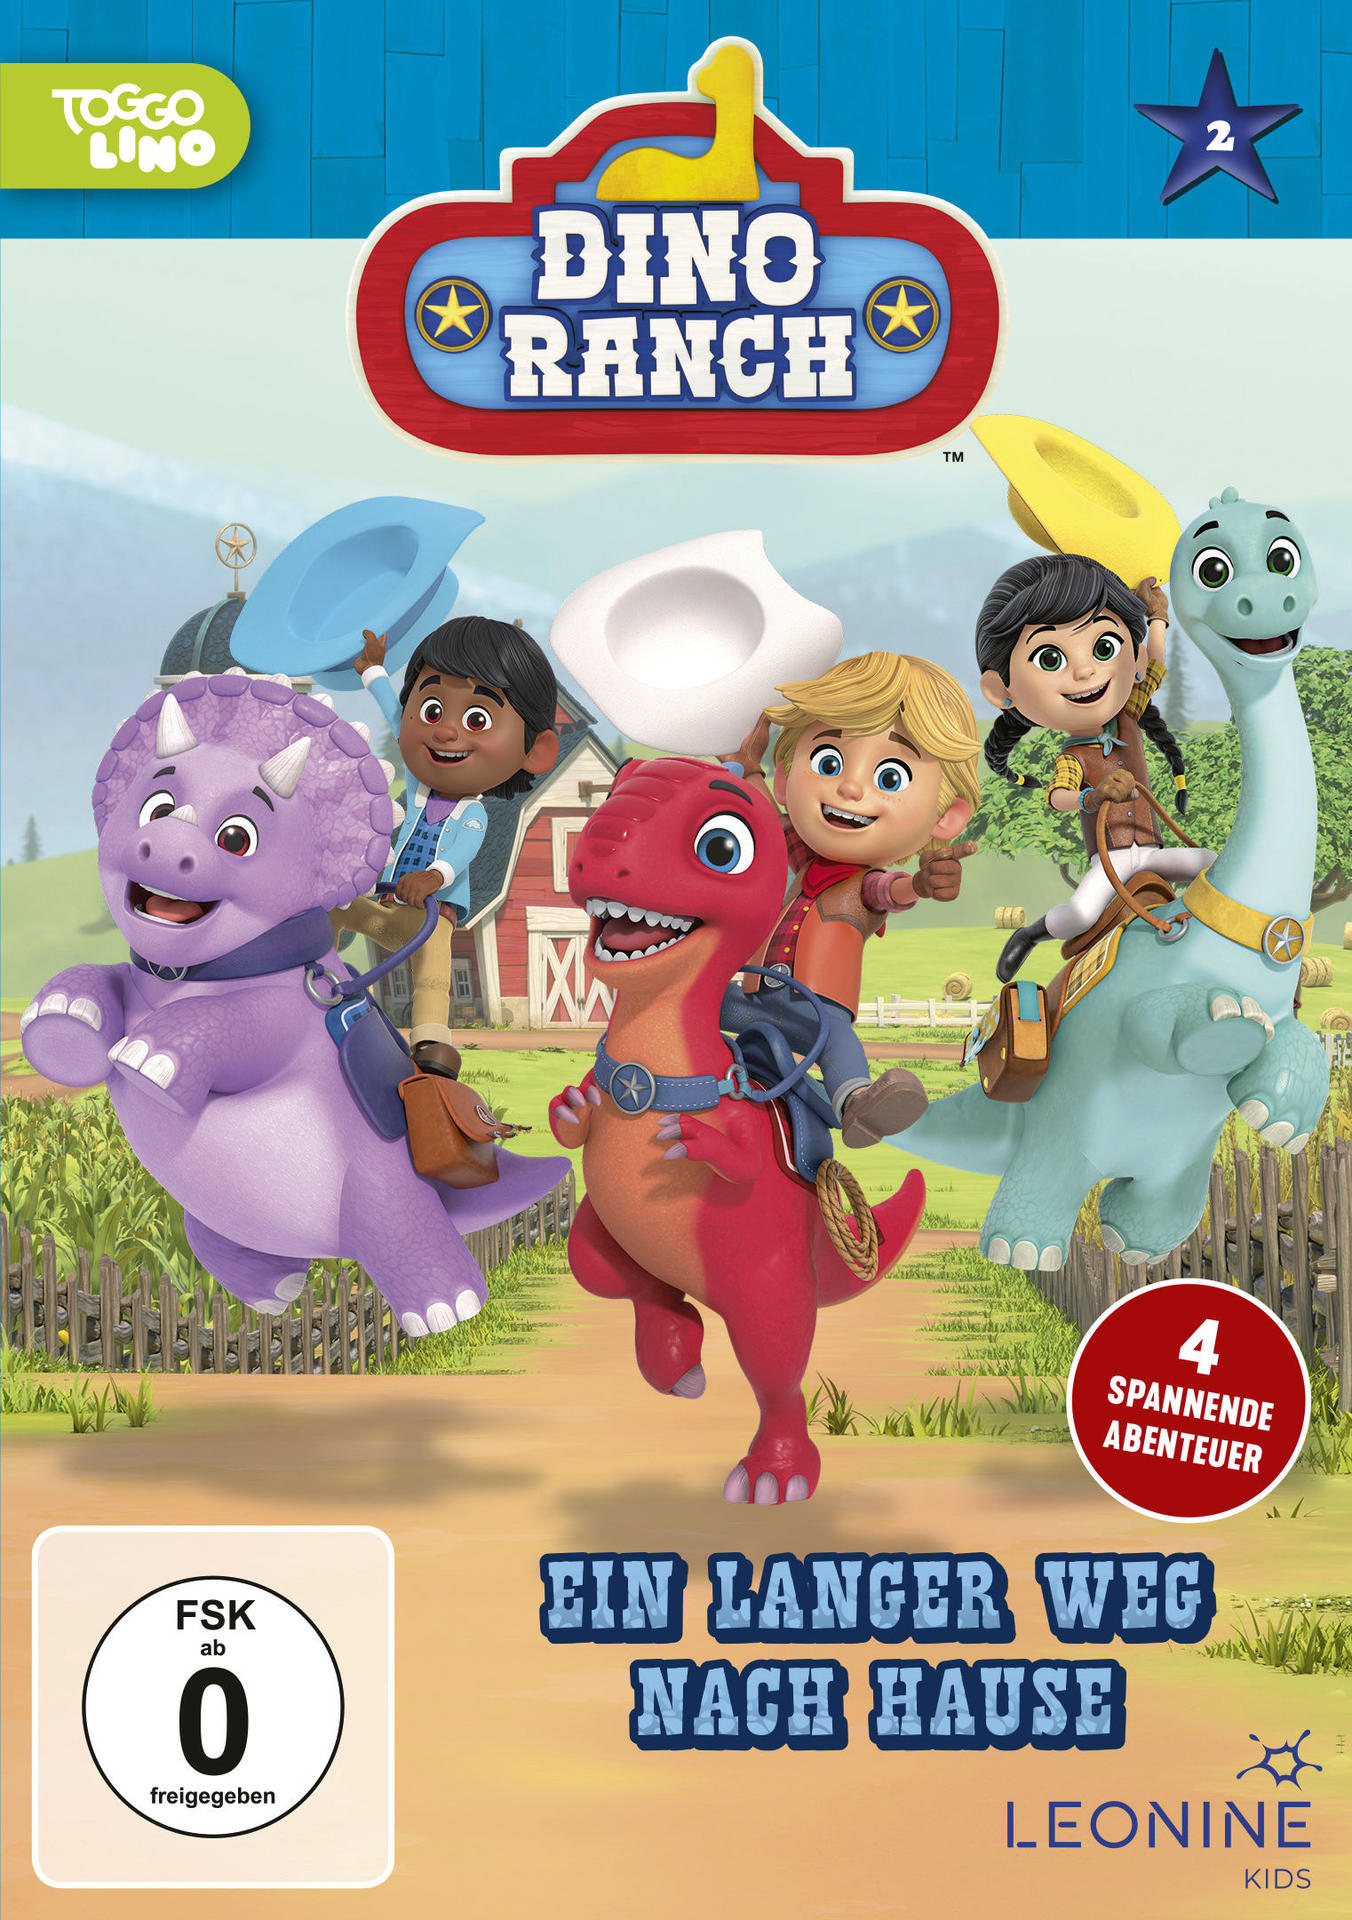 Ranch DVD Dino